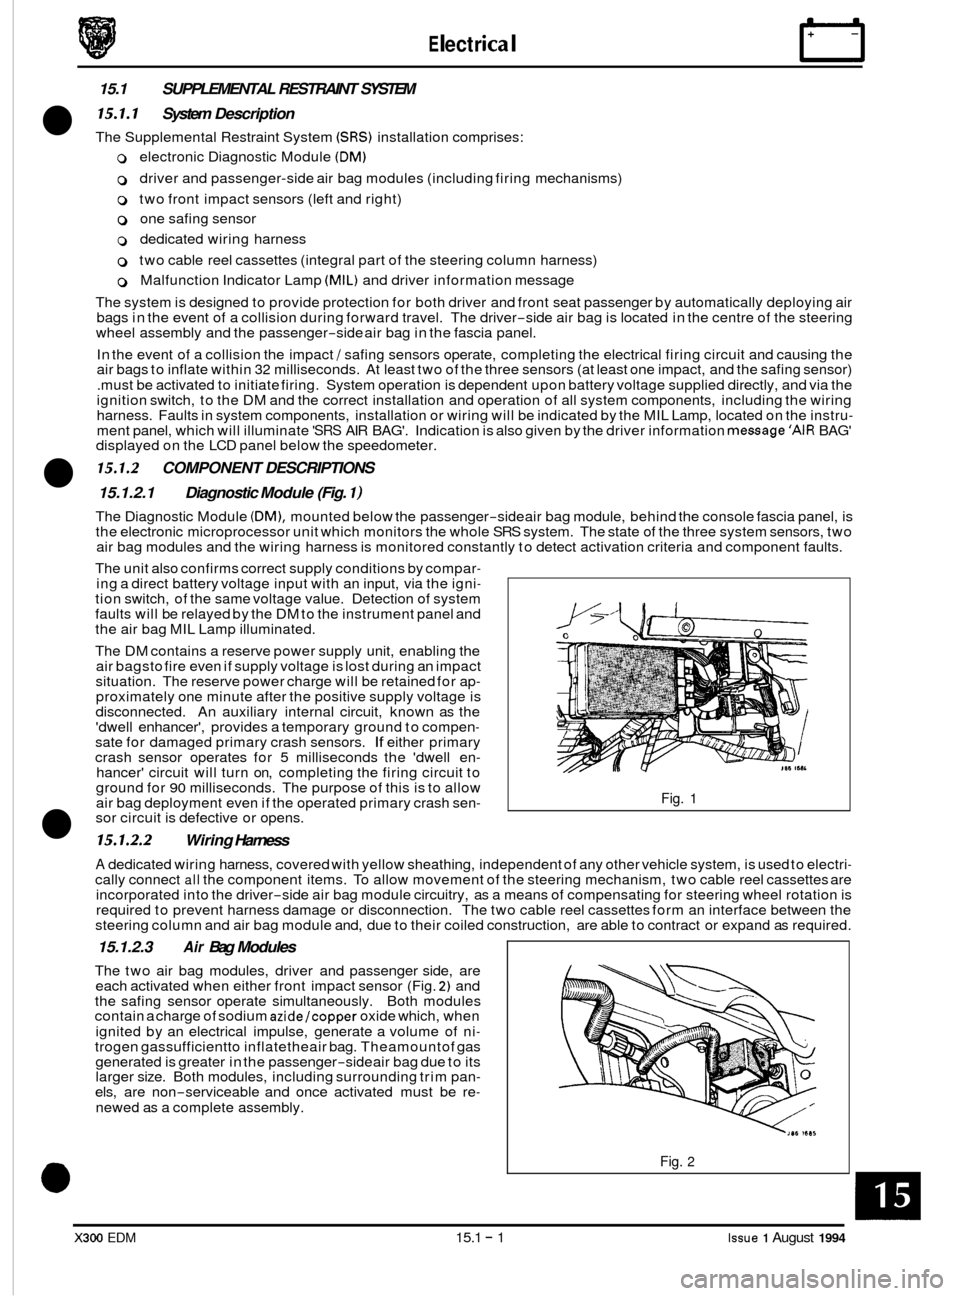 JAGUAR XJ6 1994 2.G Electrical Diagnostic Manual E I ect r ica I 
15.1 SUPPLEMENTAL RESTRAINT  SYSTEM 
15.1.1 System Description 
The Supplemental  Restraint System (SRS) installation  comprises: 
0 electronic Diagnostic  Module (DM) 
0 driver and p